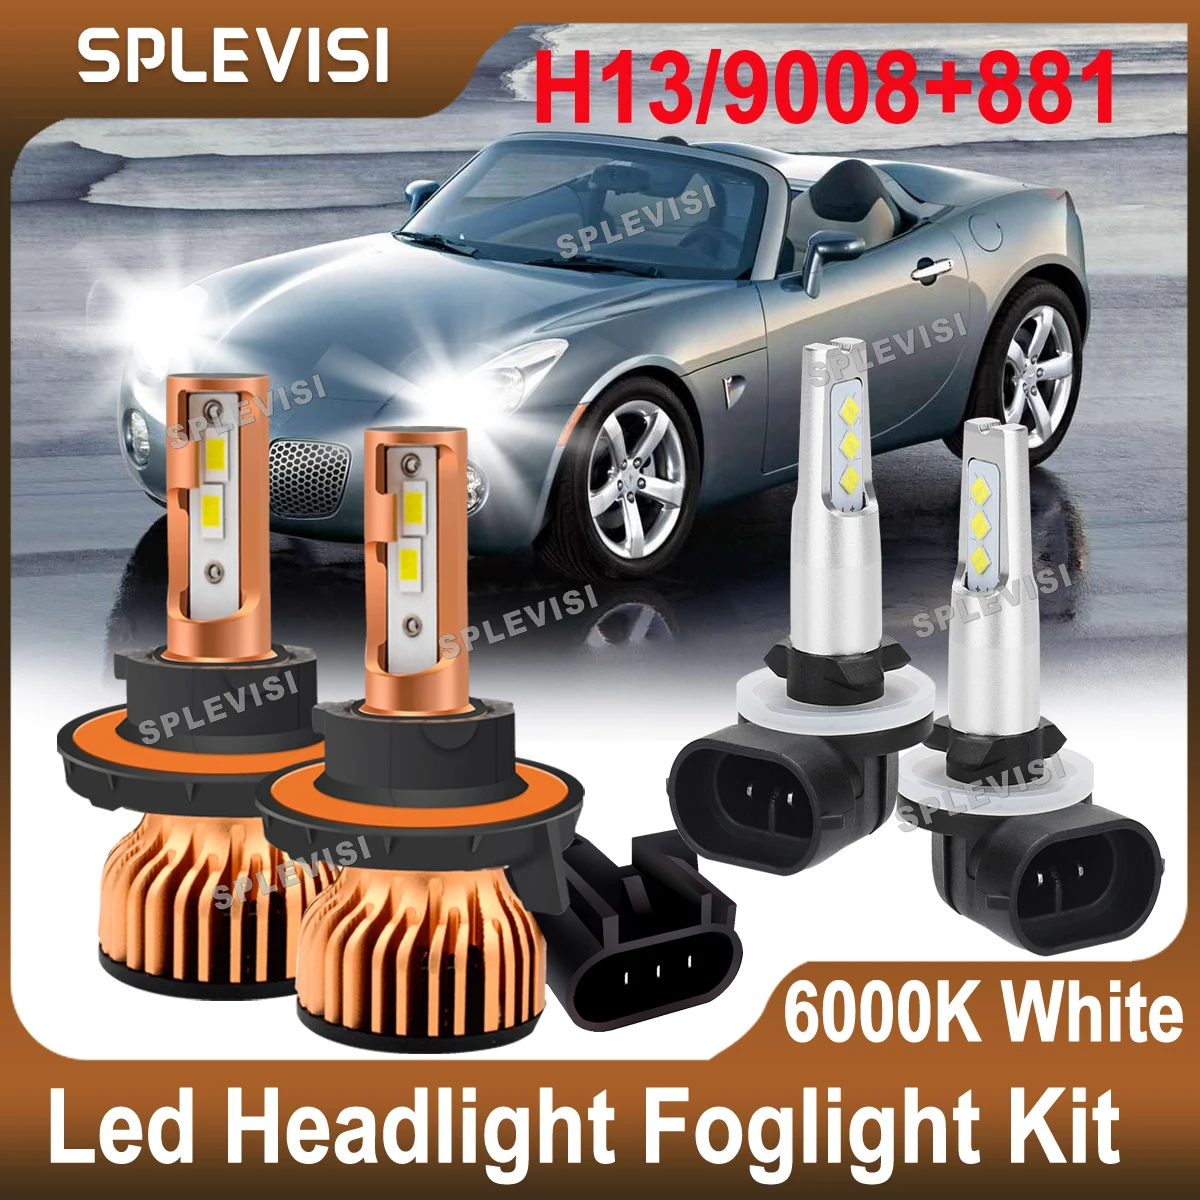 

Led Auto Lamp Headlight High Low Beam H13 Foglight 881 Combo 6000K White 40000LM Kit For Pontiac Solstice 2006 2007 2008 2009